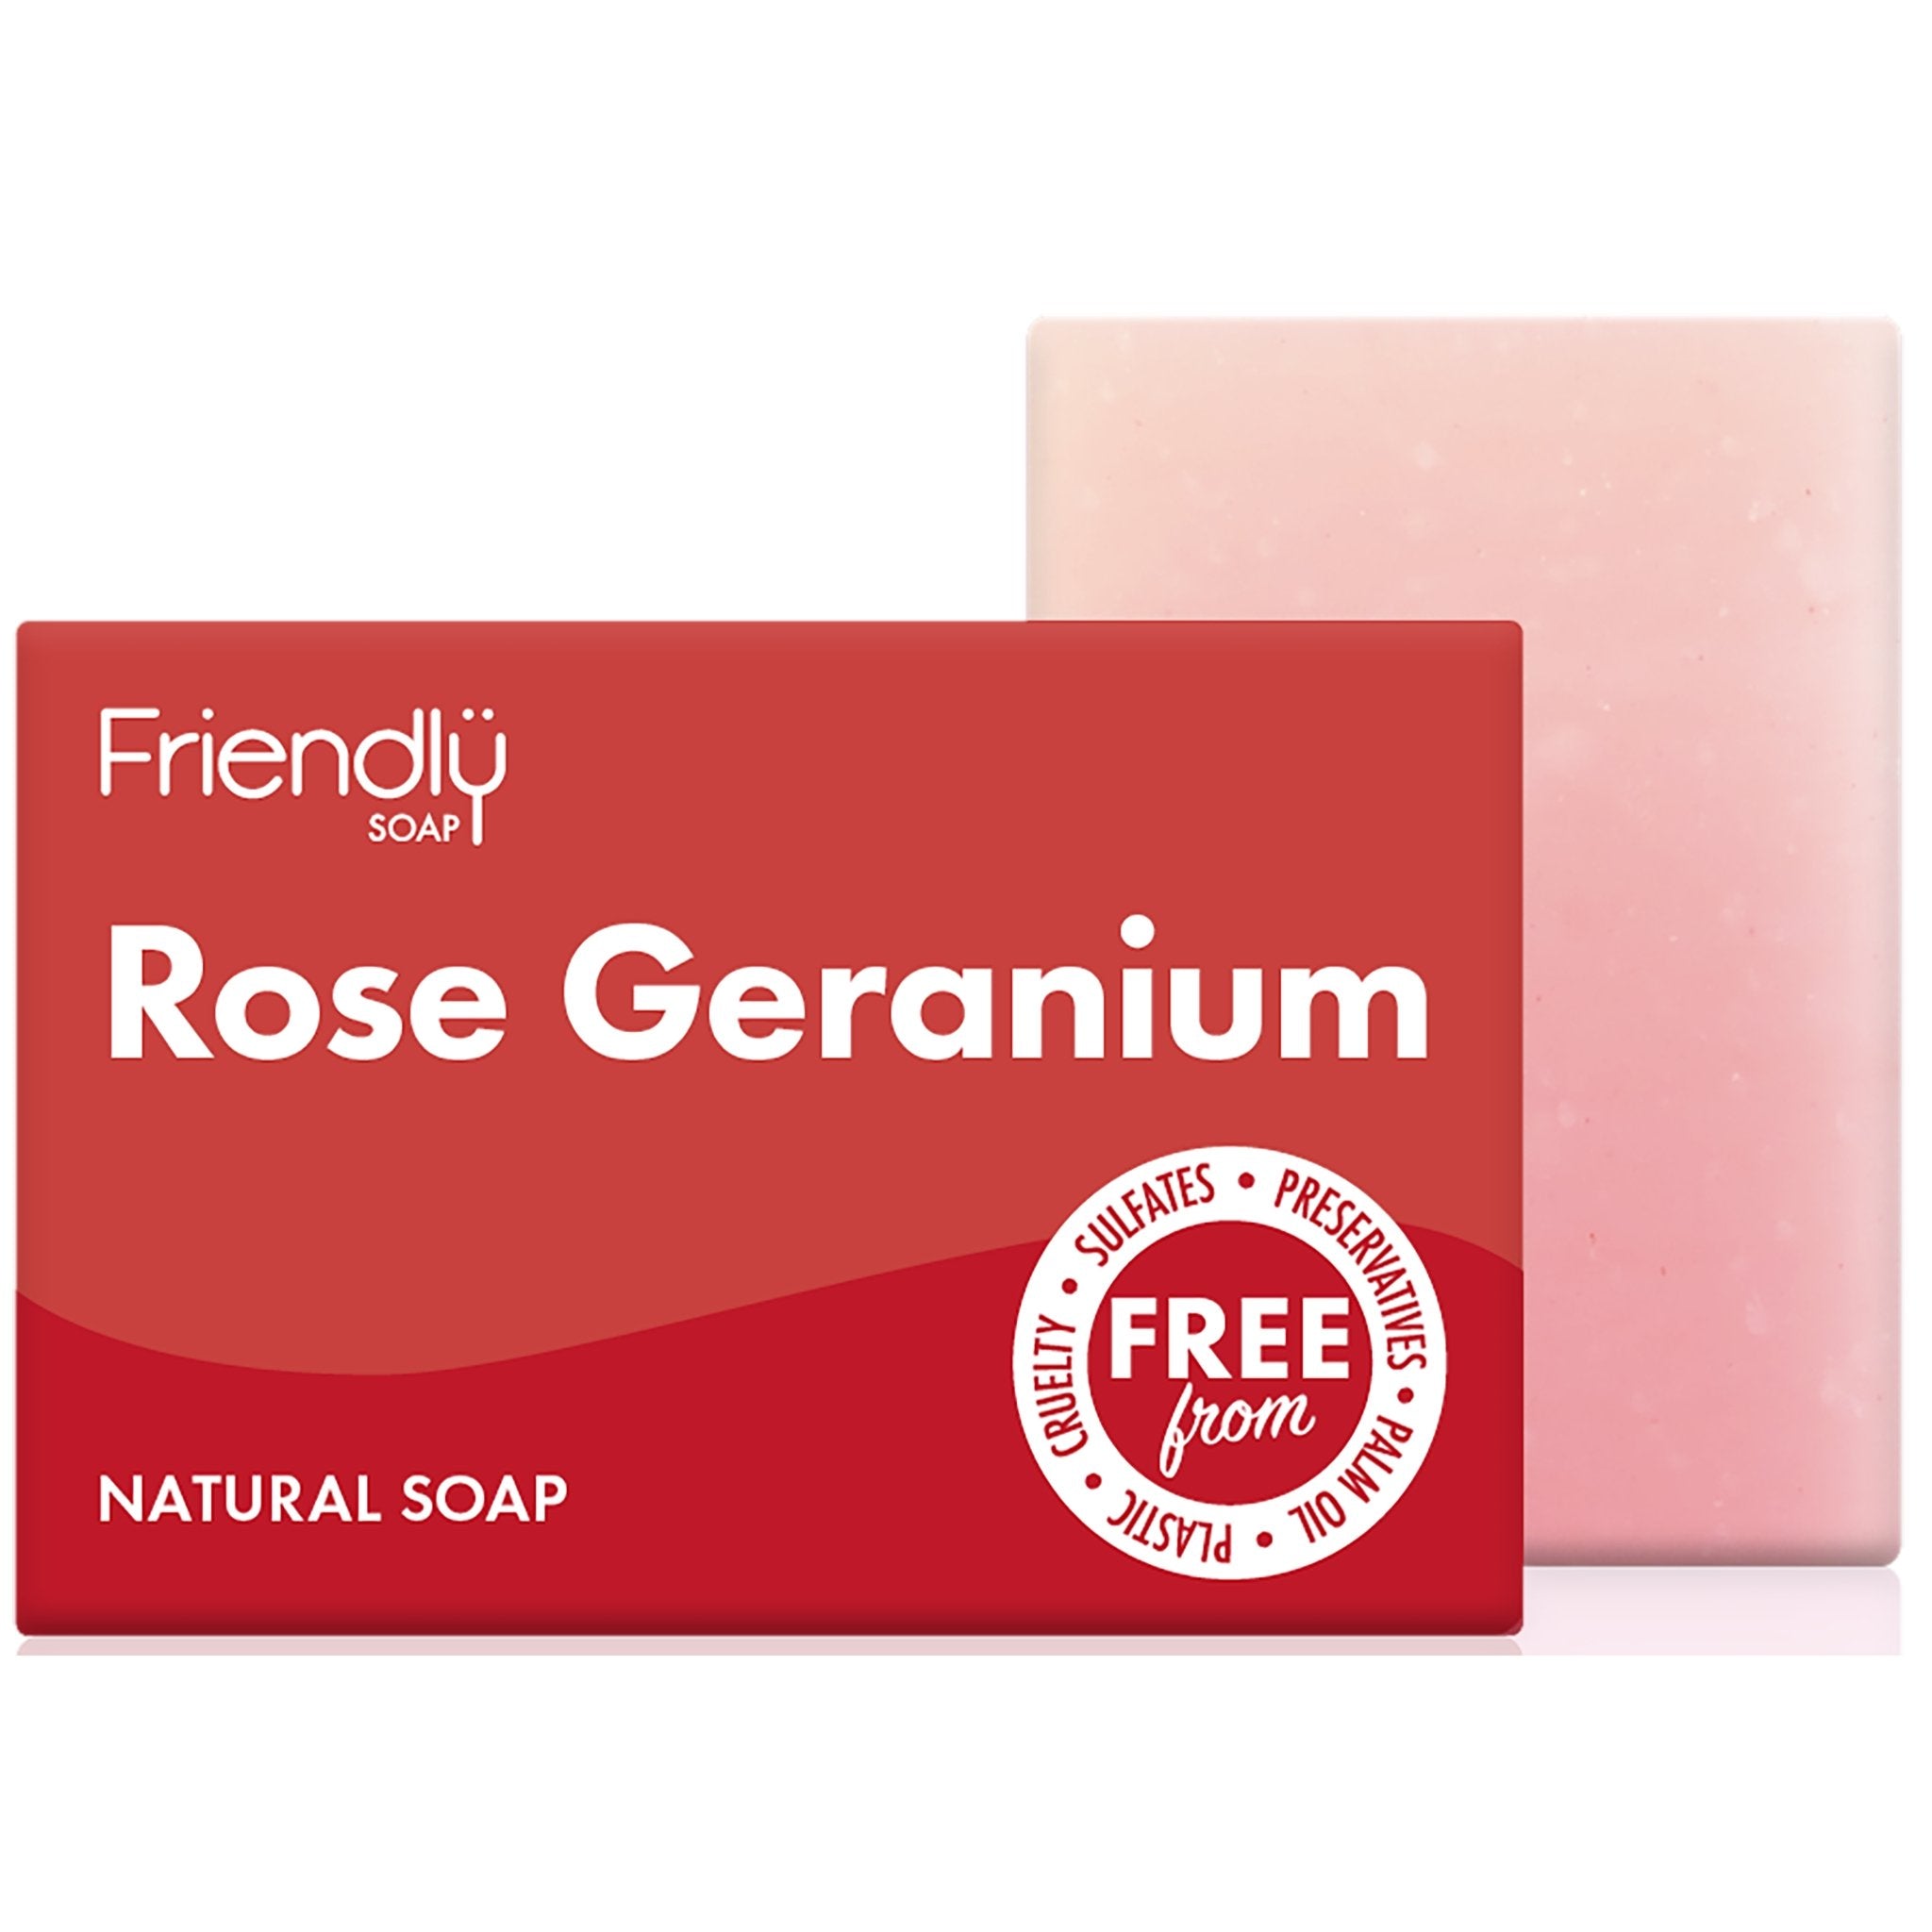 Rose Geranium Soap Bar - mypure.co.uk